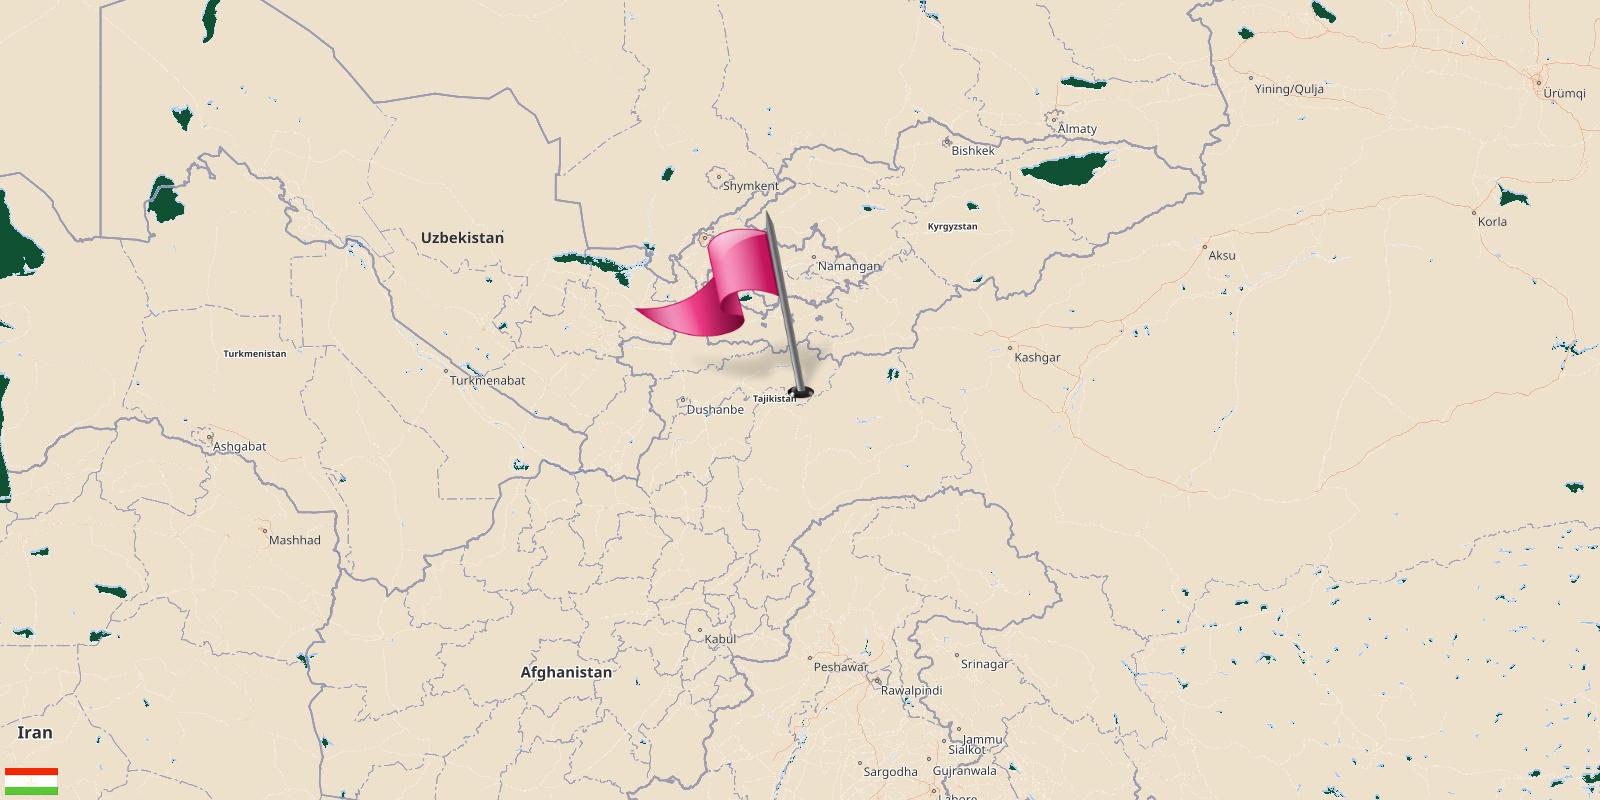 Tajikistan map